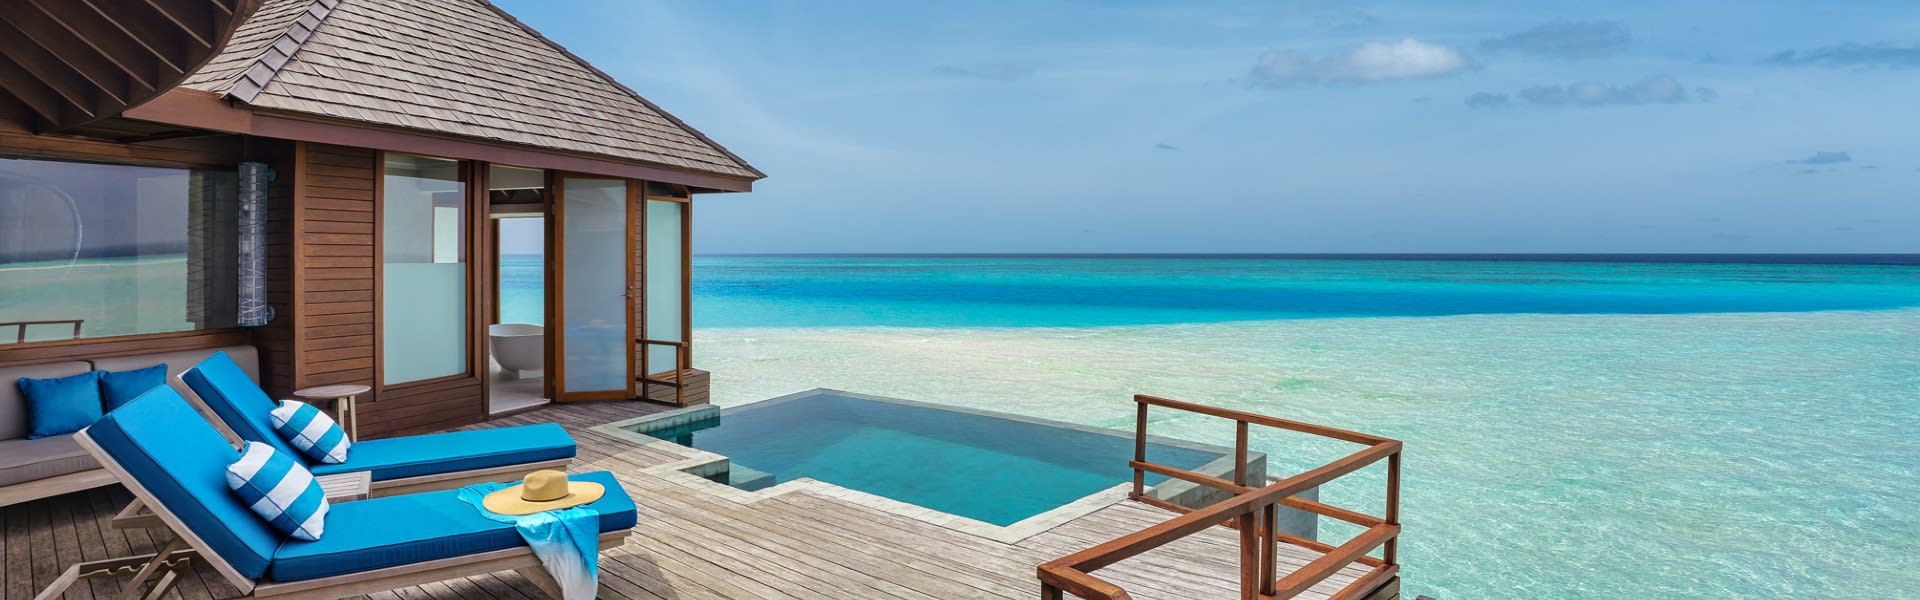 Over Water Pool Suite Villa Deck with Loungers at Anantara Dhigu Maldives Resort